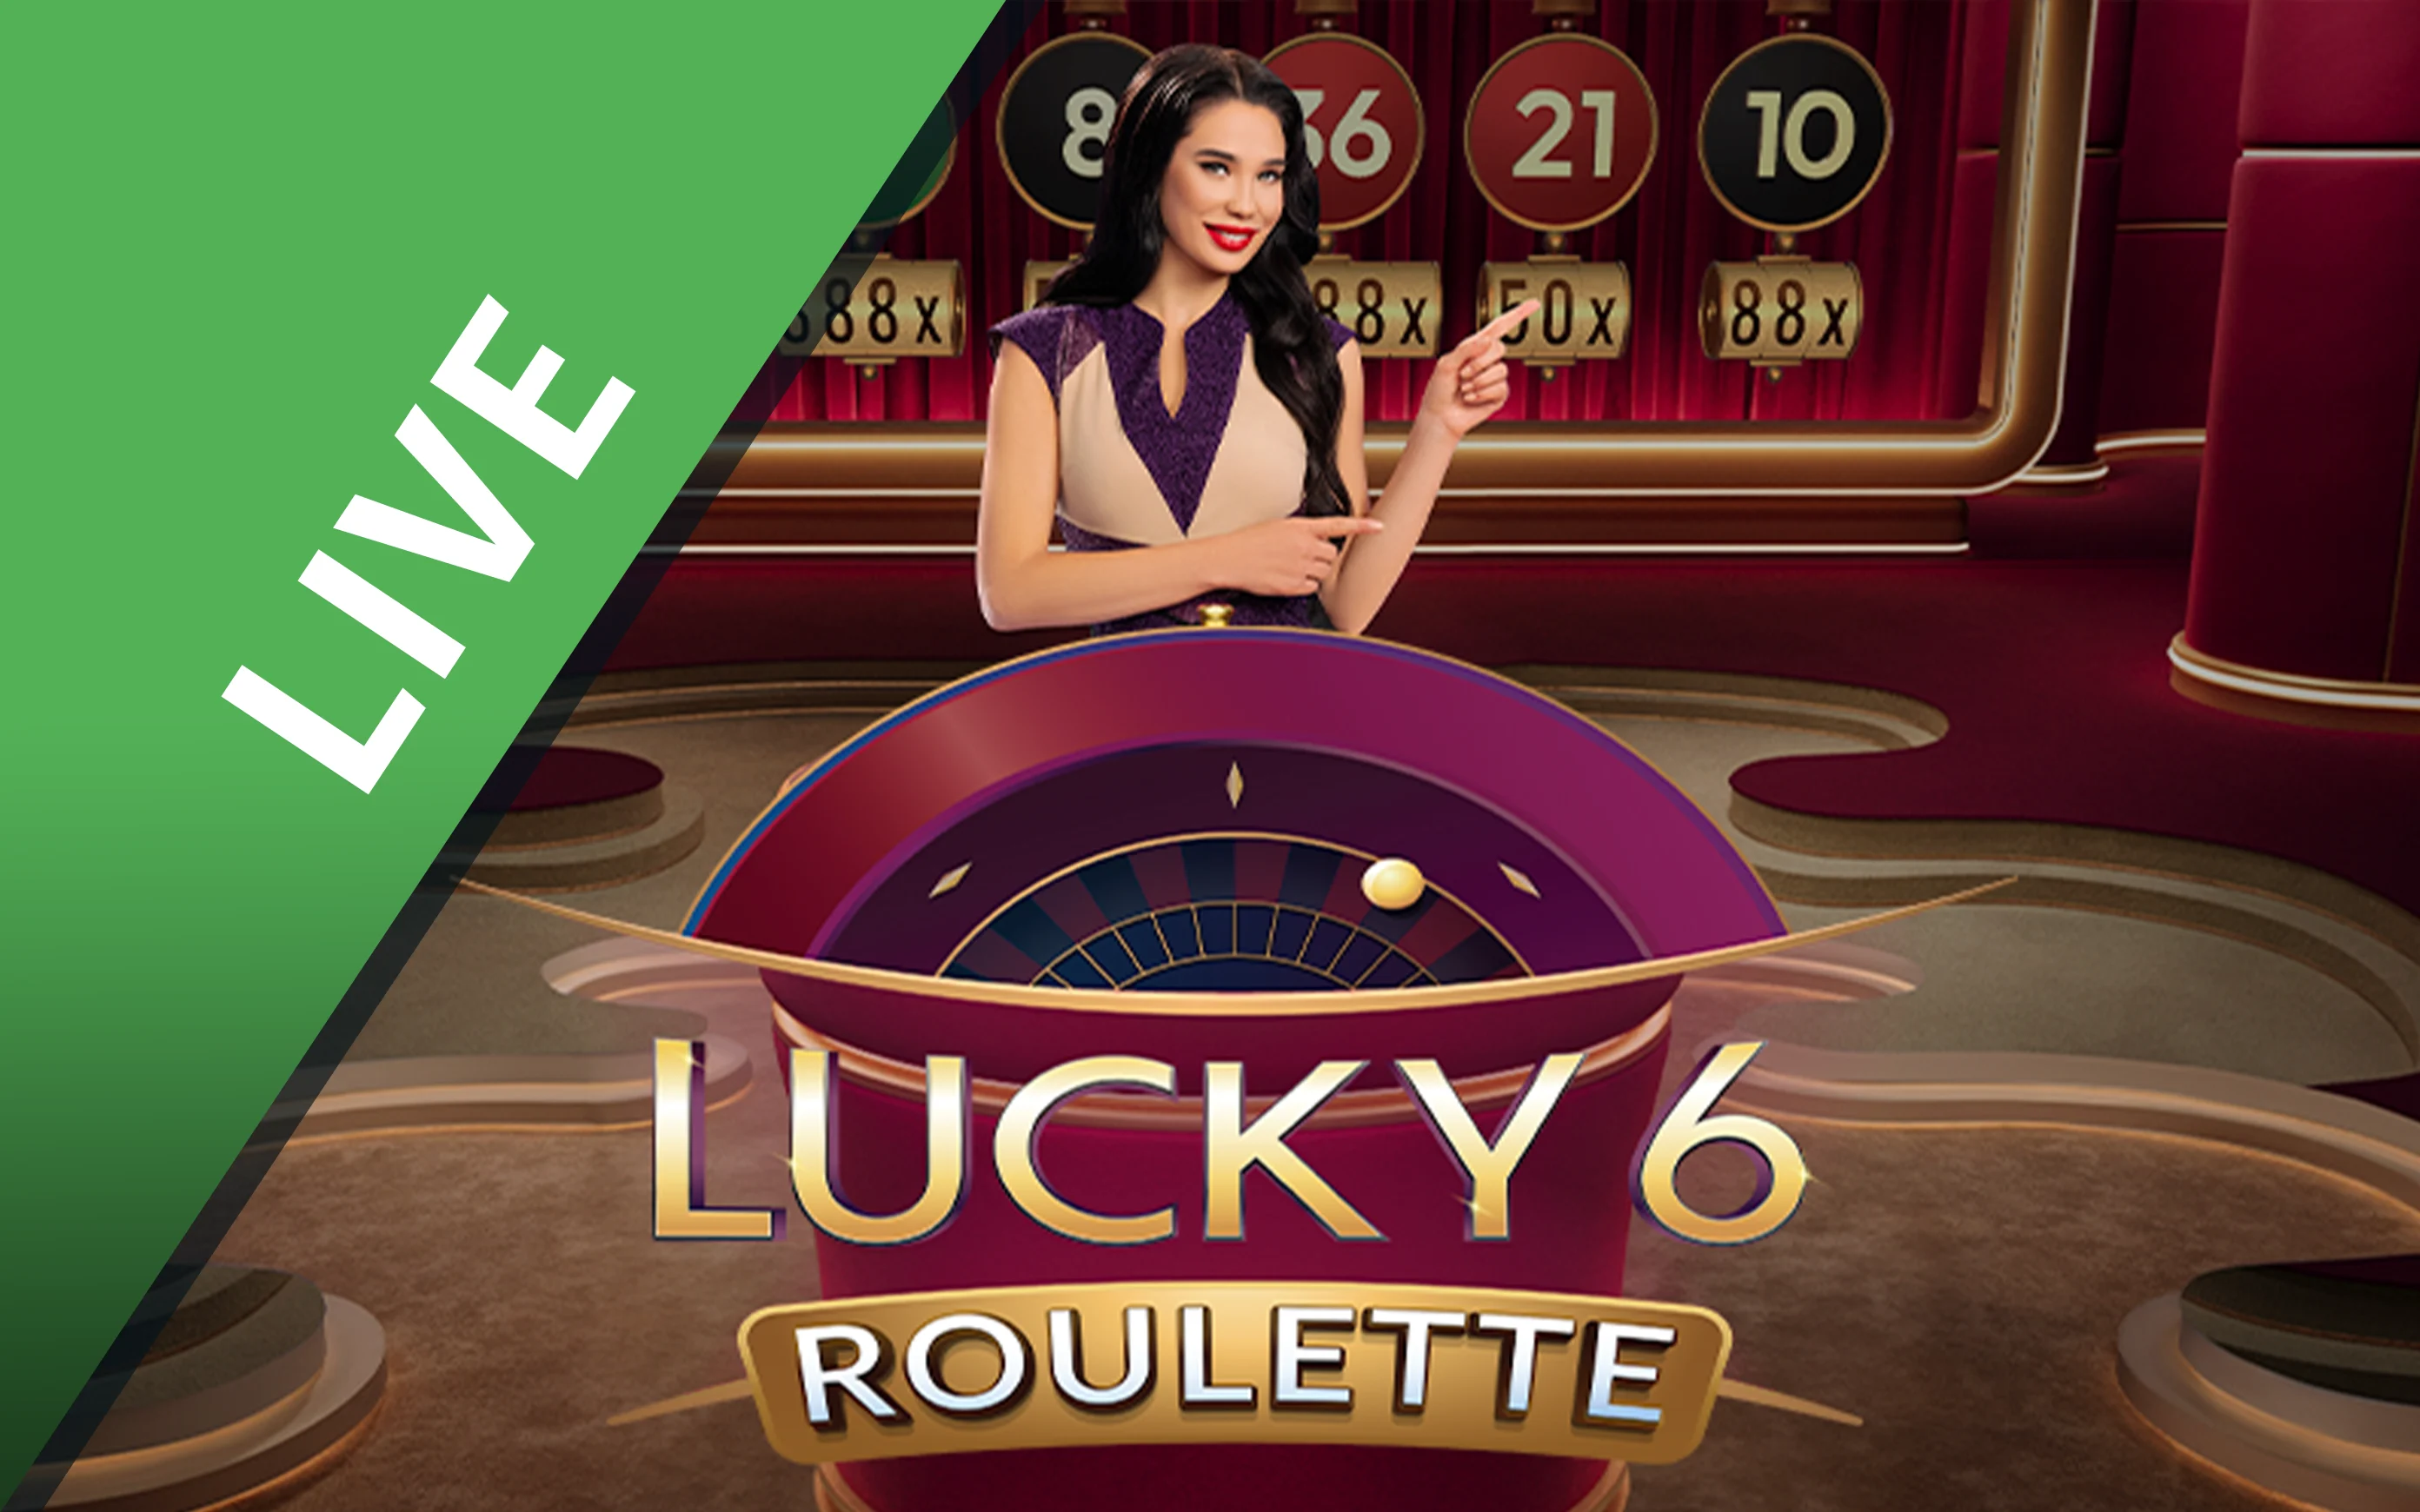 Speel Lucky 6 Roulette™ op Starcasino.be online casino